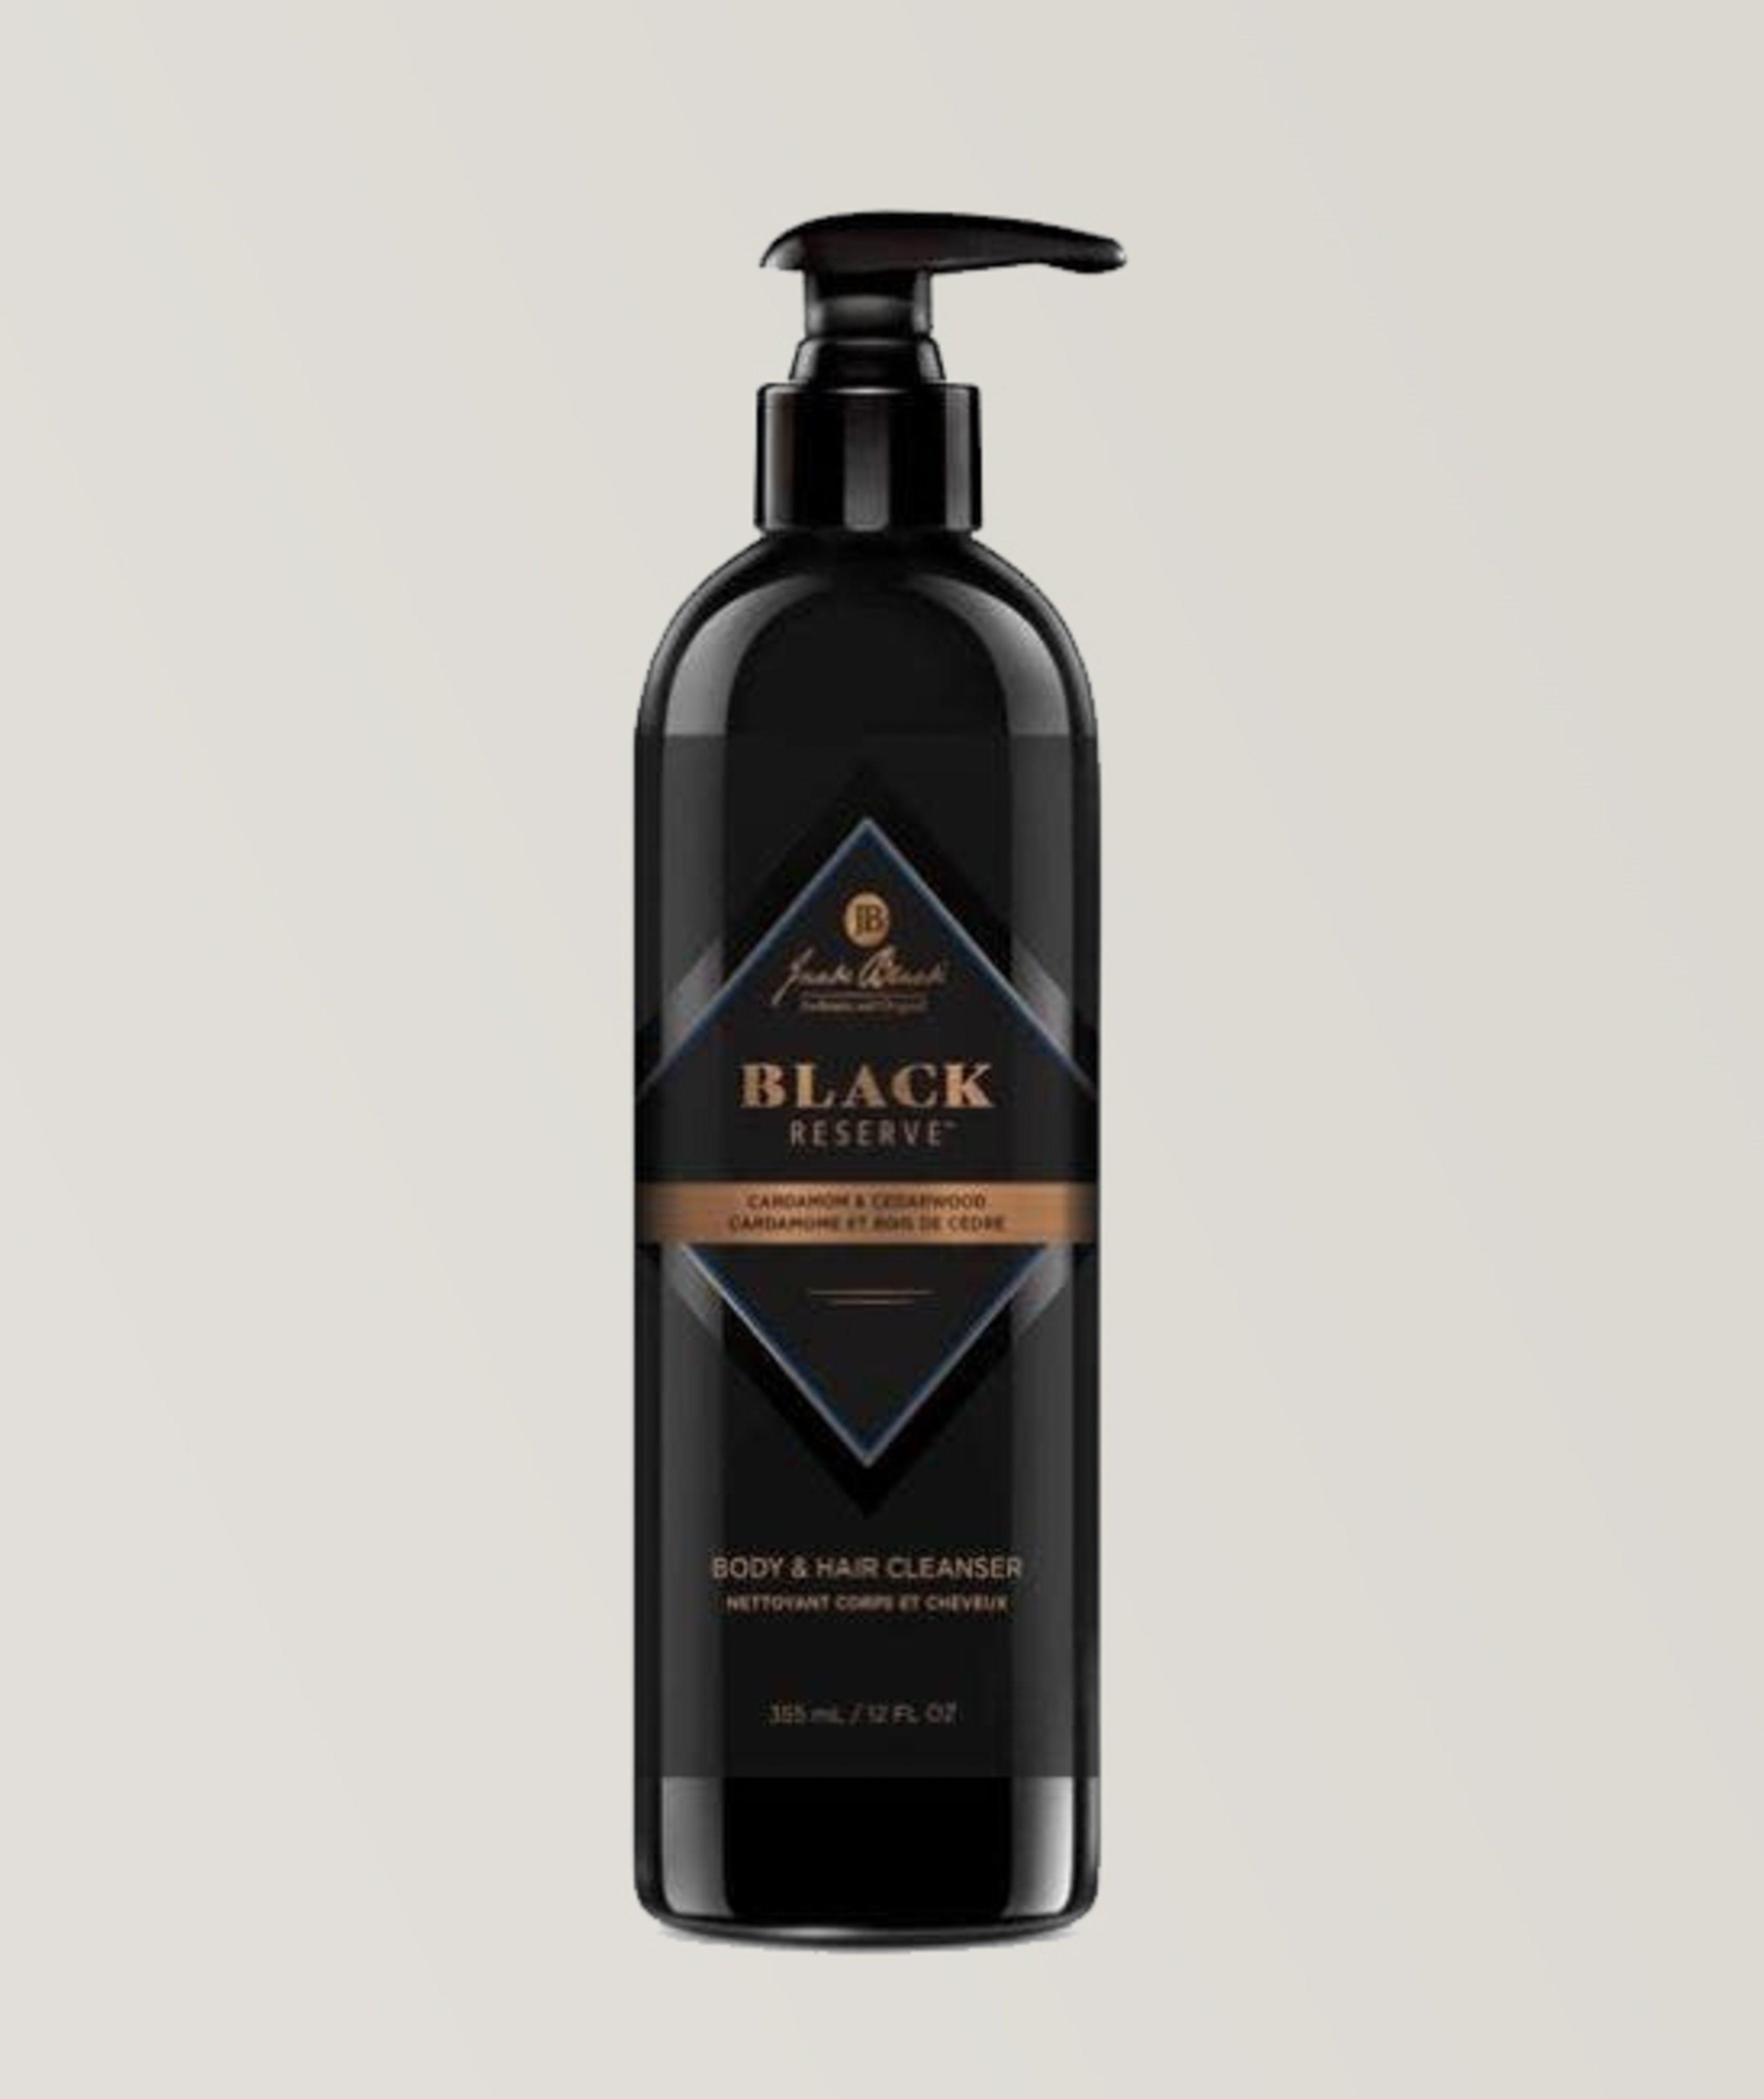 Black Reserve Body & Hair Cleanser